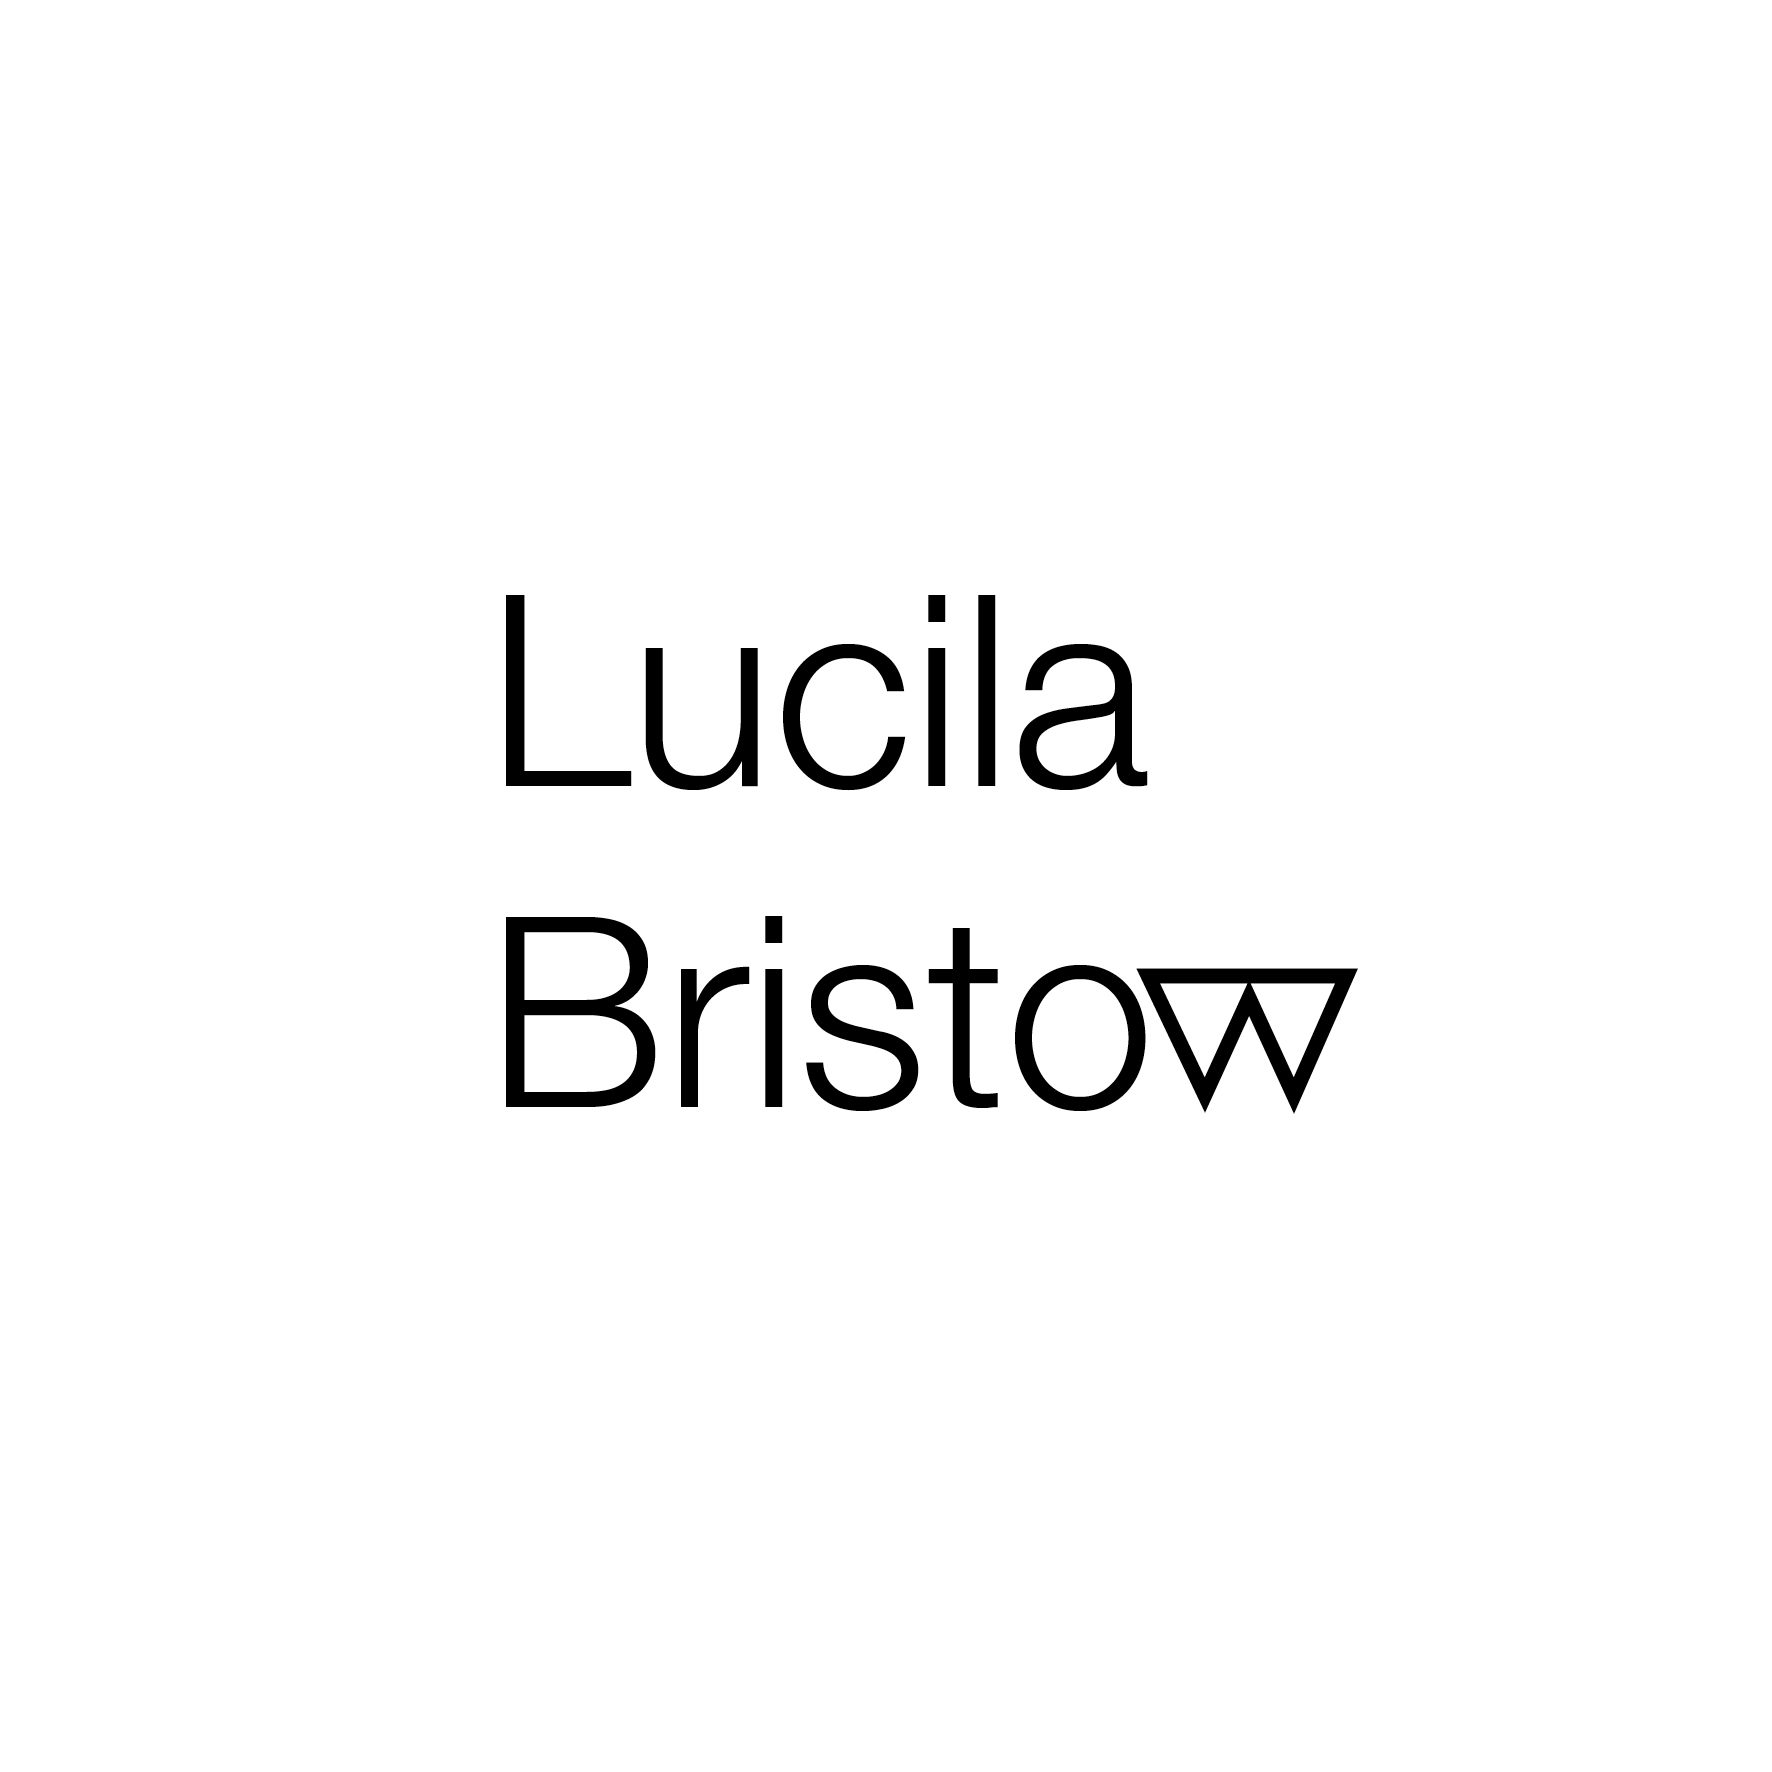 Lucila Bristow